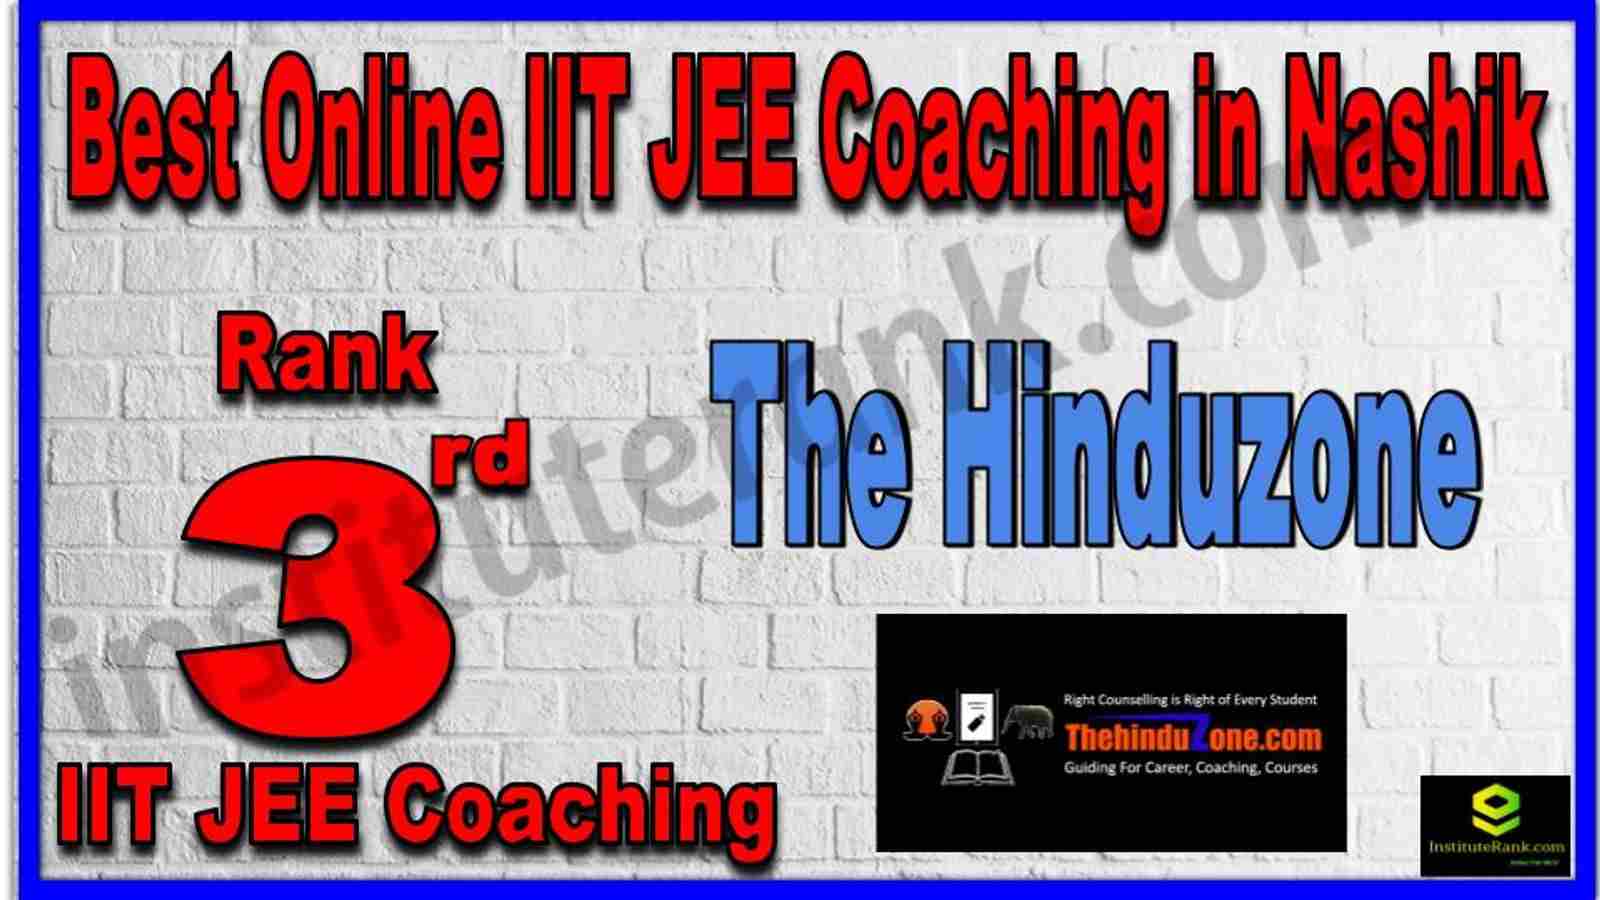 Rank 3rd Best Online IIT JEE Coaching in Nashik